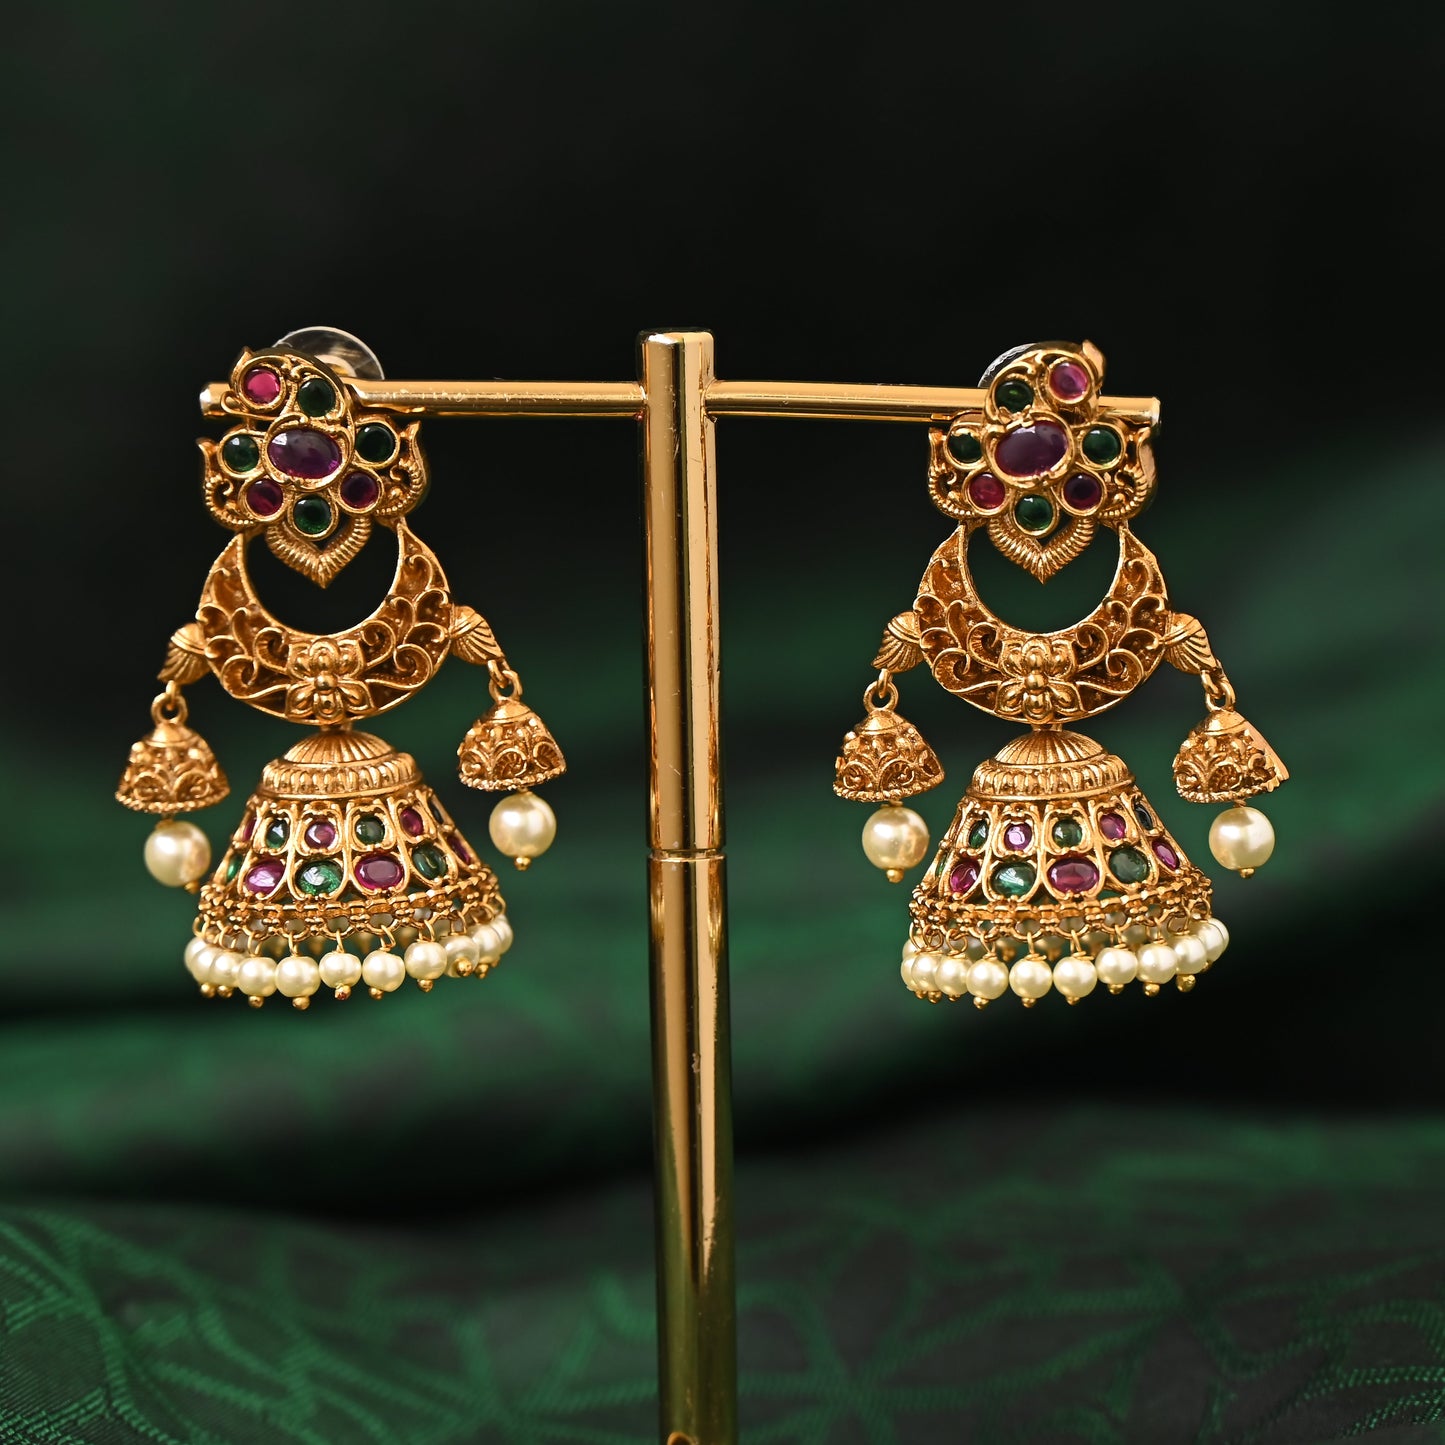 Premium Kemp Traditional Bridal Festive Jhumkas in Antique Gold - No Figure, No Idol